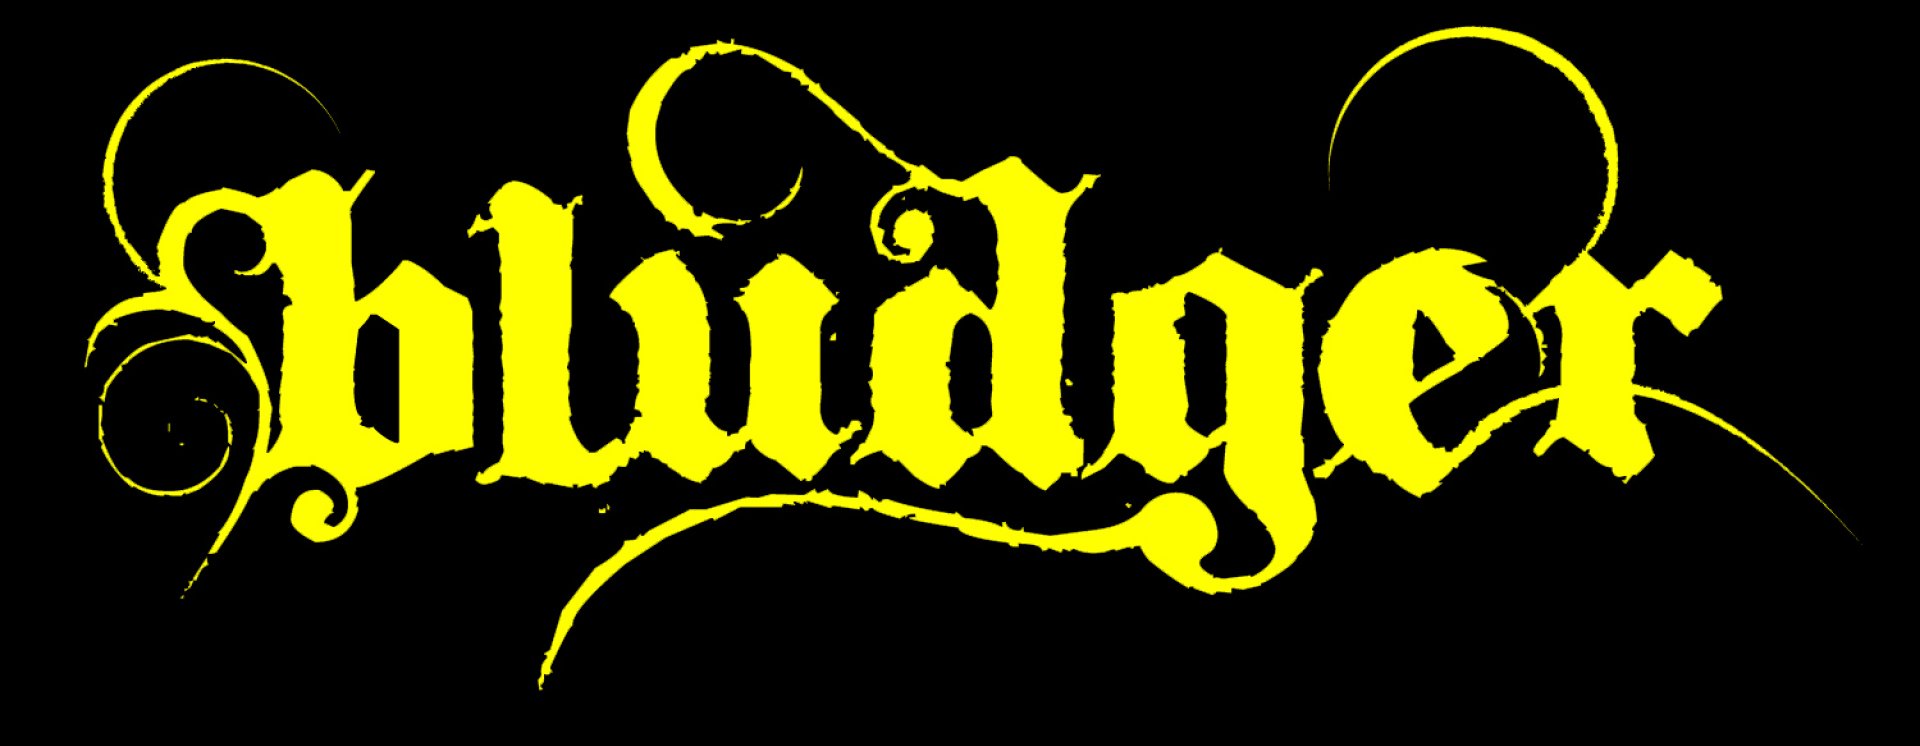 Bludger logo yellow 1 copy